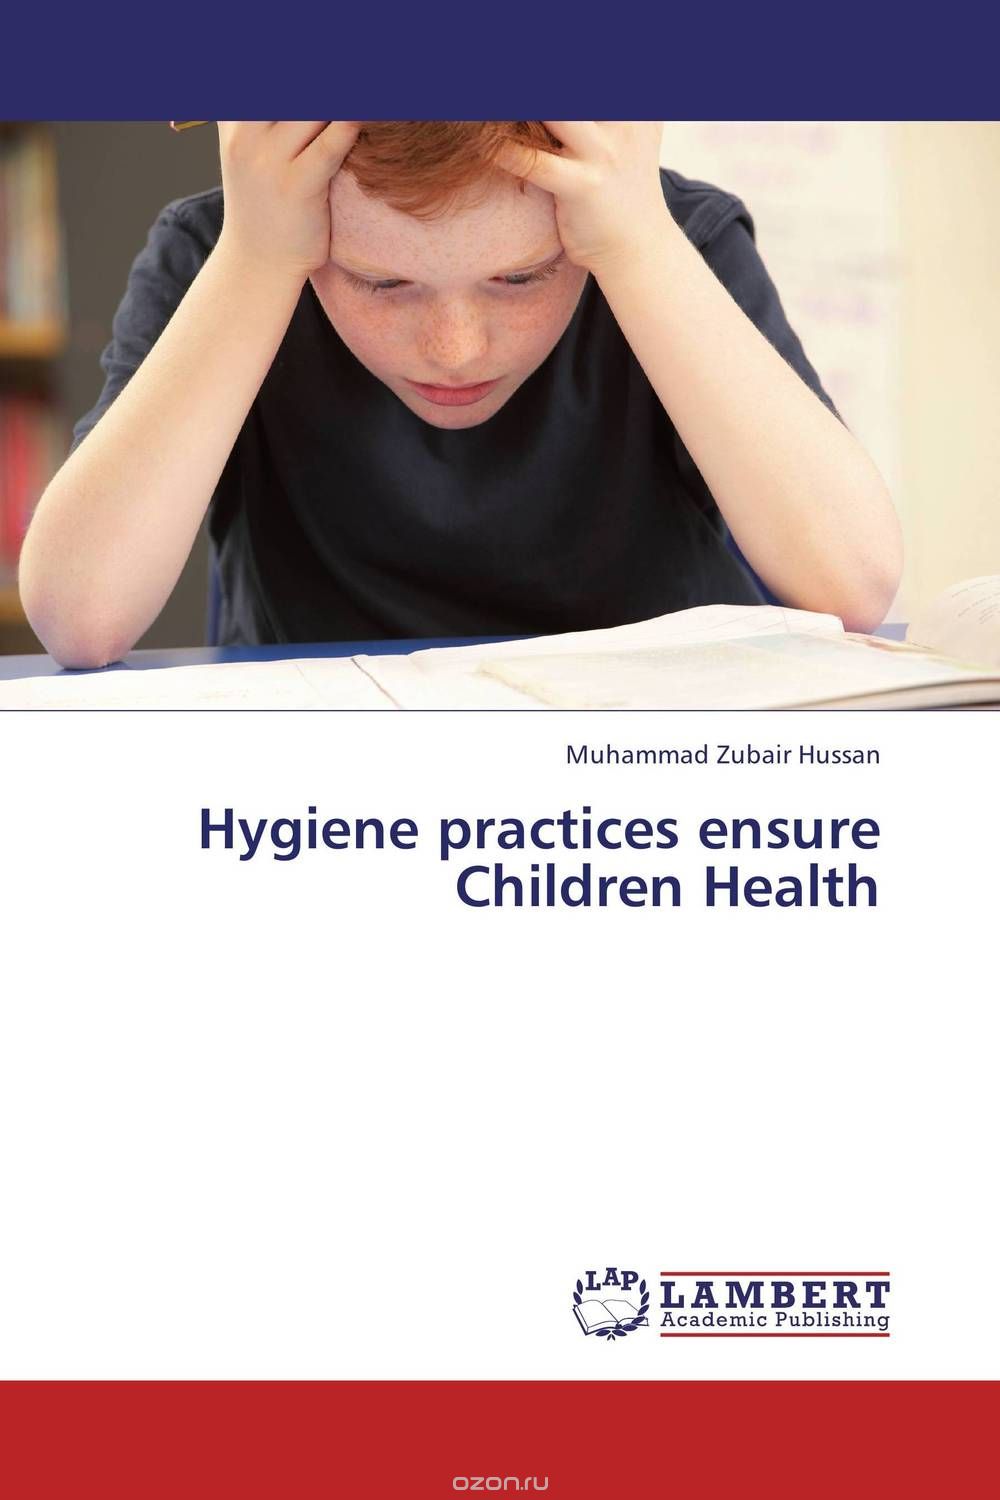 Скачать книгу "Hygiene practices ensure Children Health"